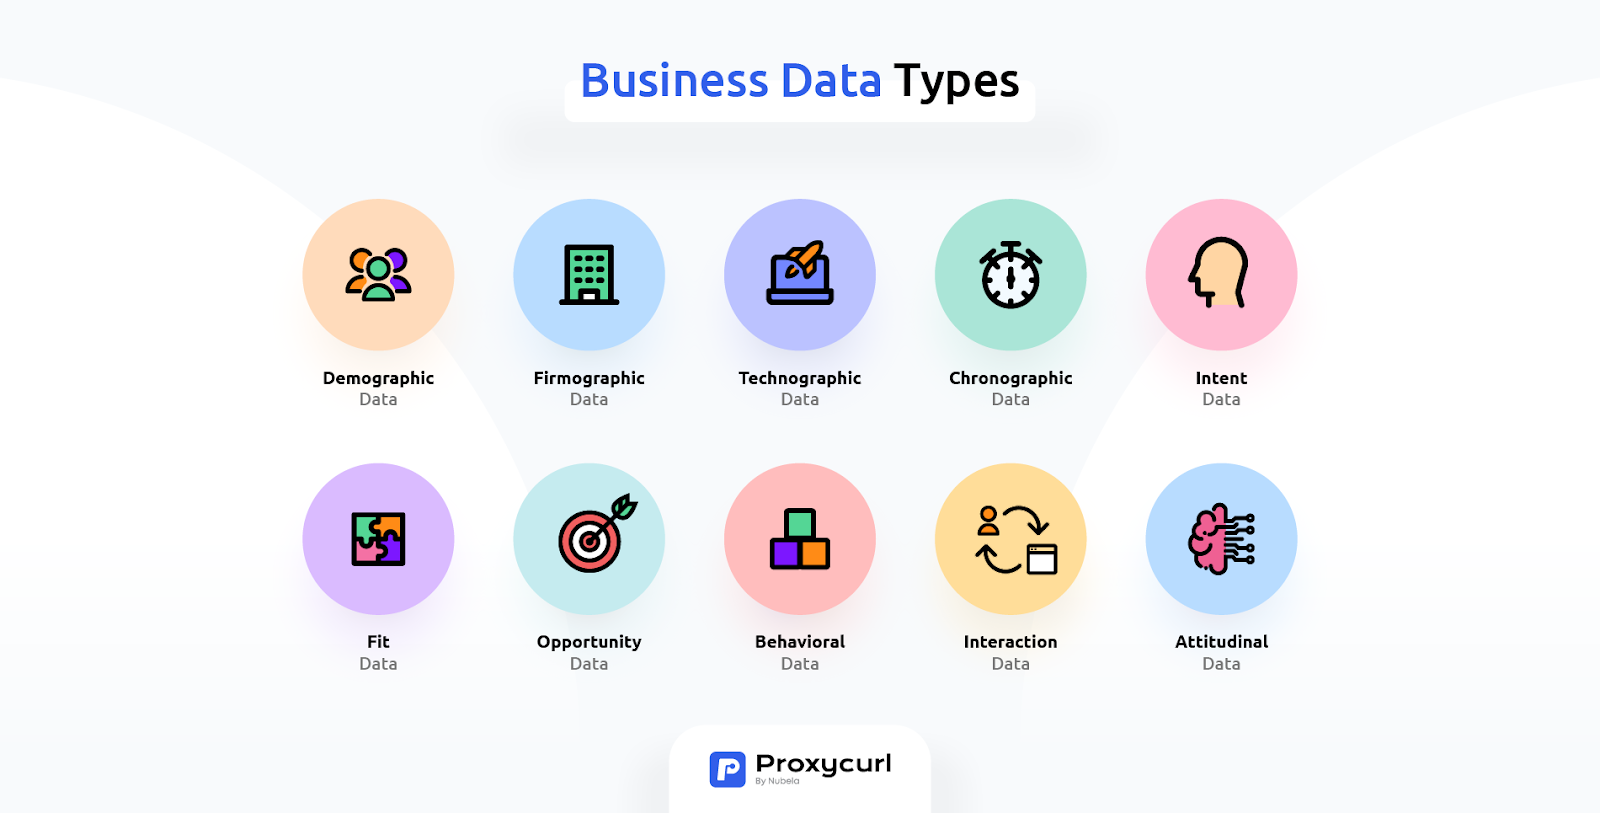 B2B Business data types